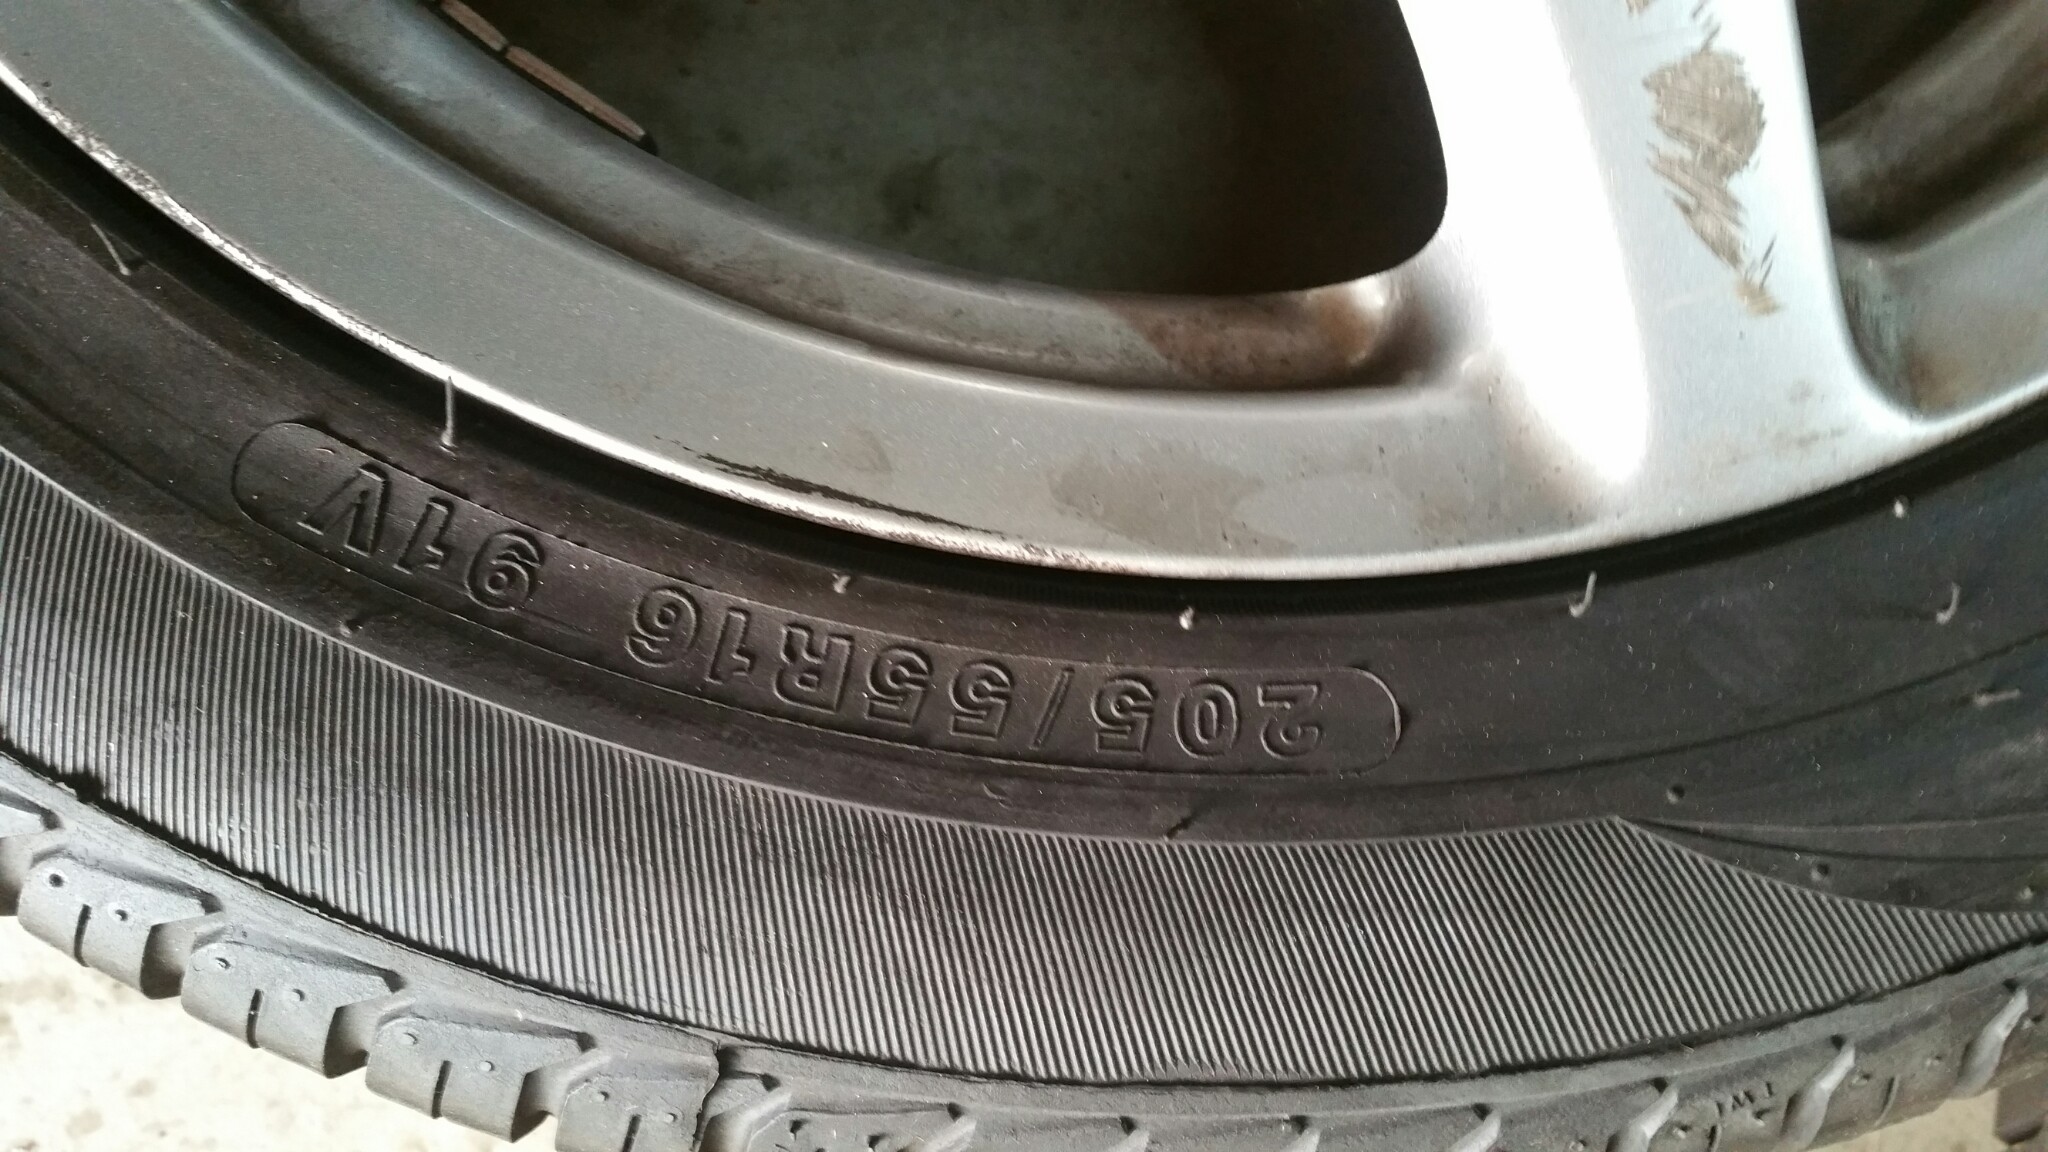 Honda S2000 OEM Rims With RWC Tyres